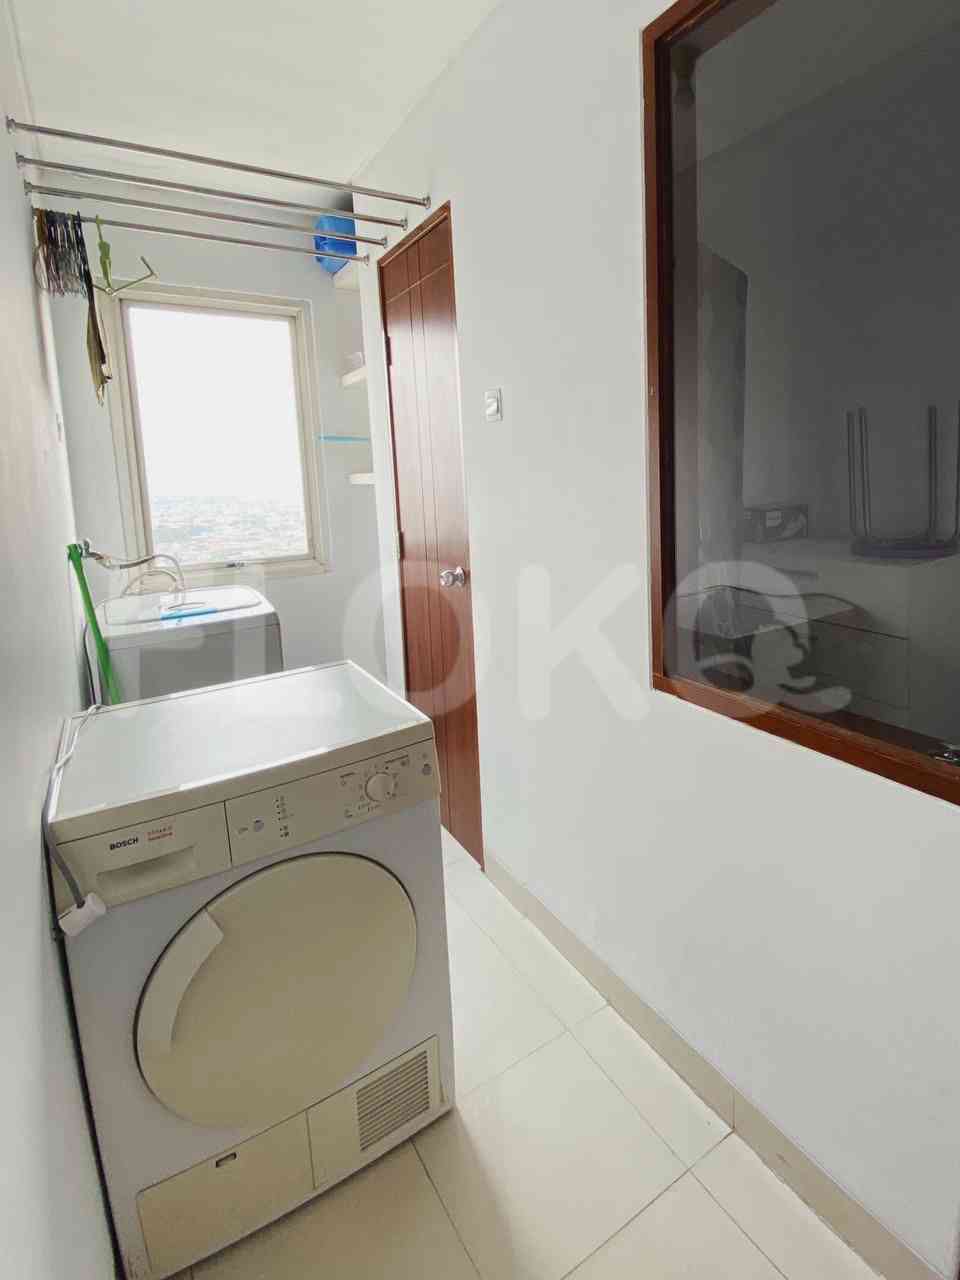 4 Bedroom on 26th Floor for Rent in Permata Hijau Suites Apartment - fpeb05 12